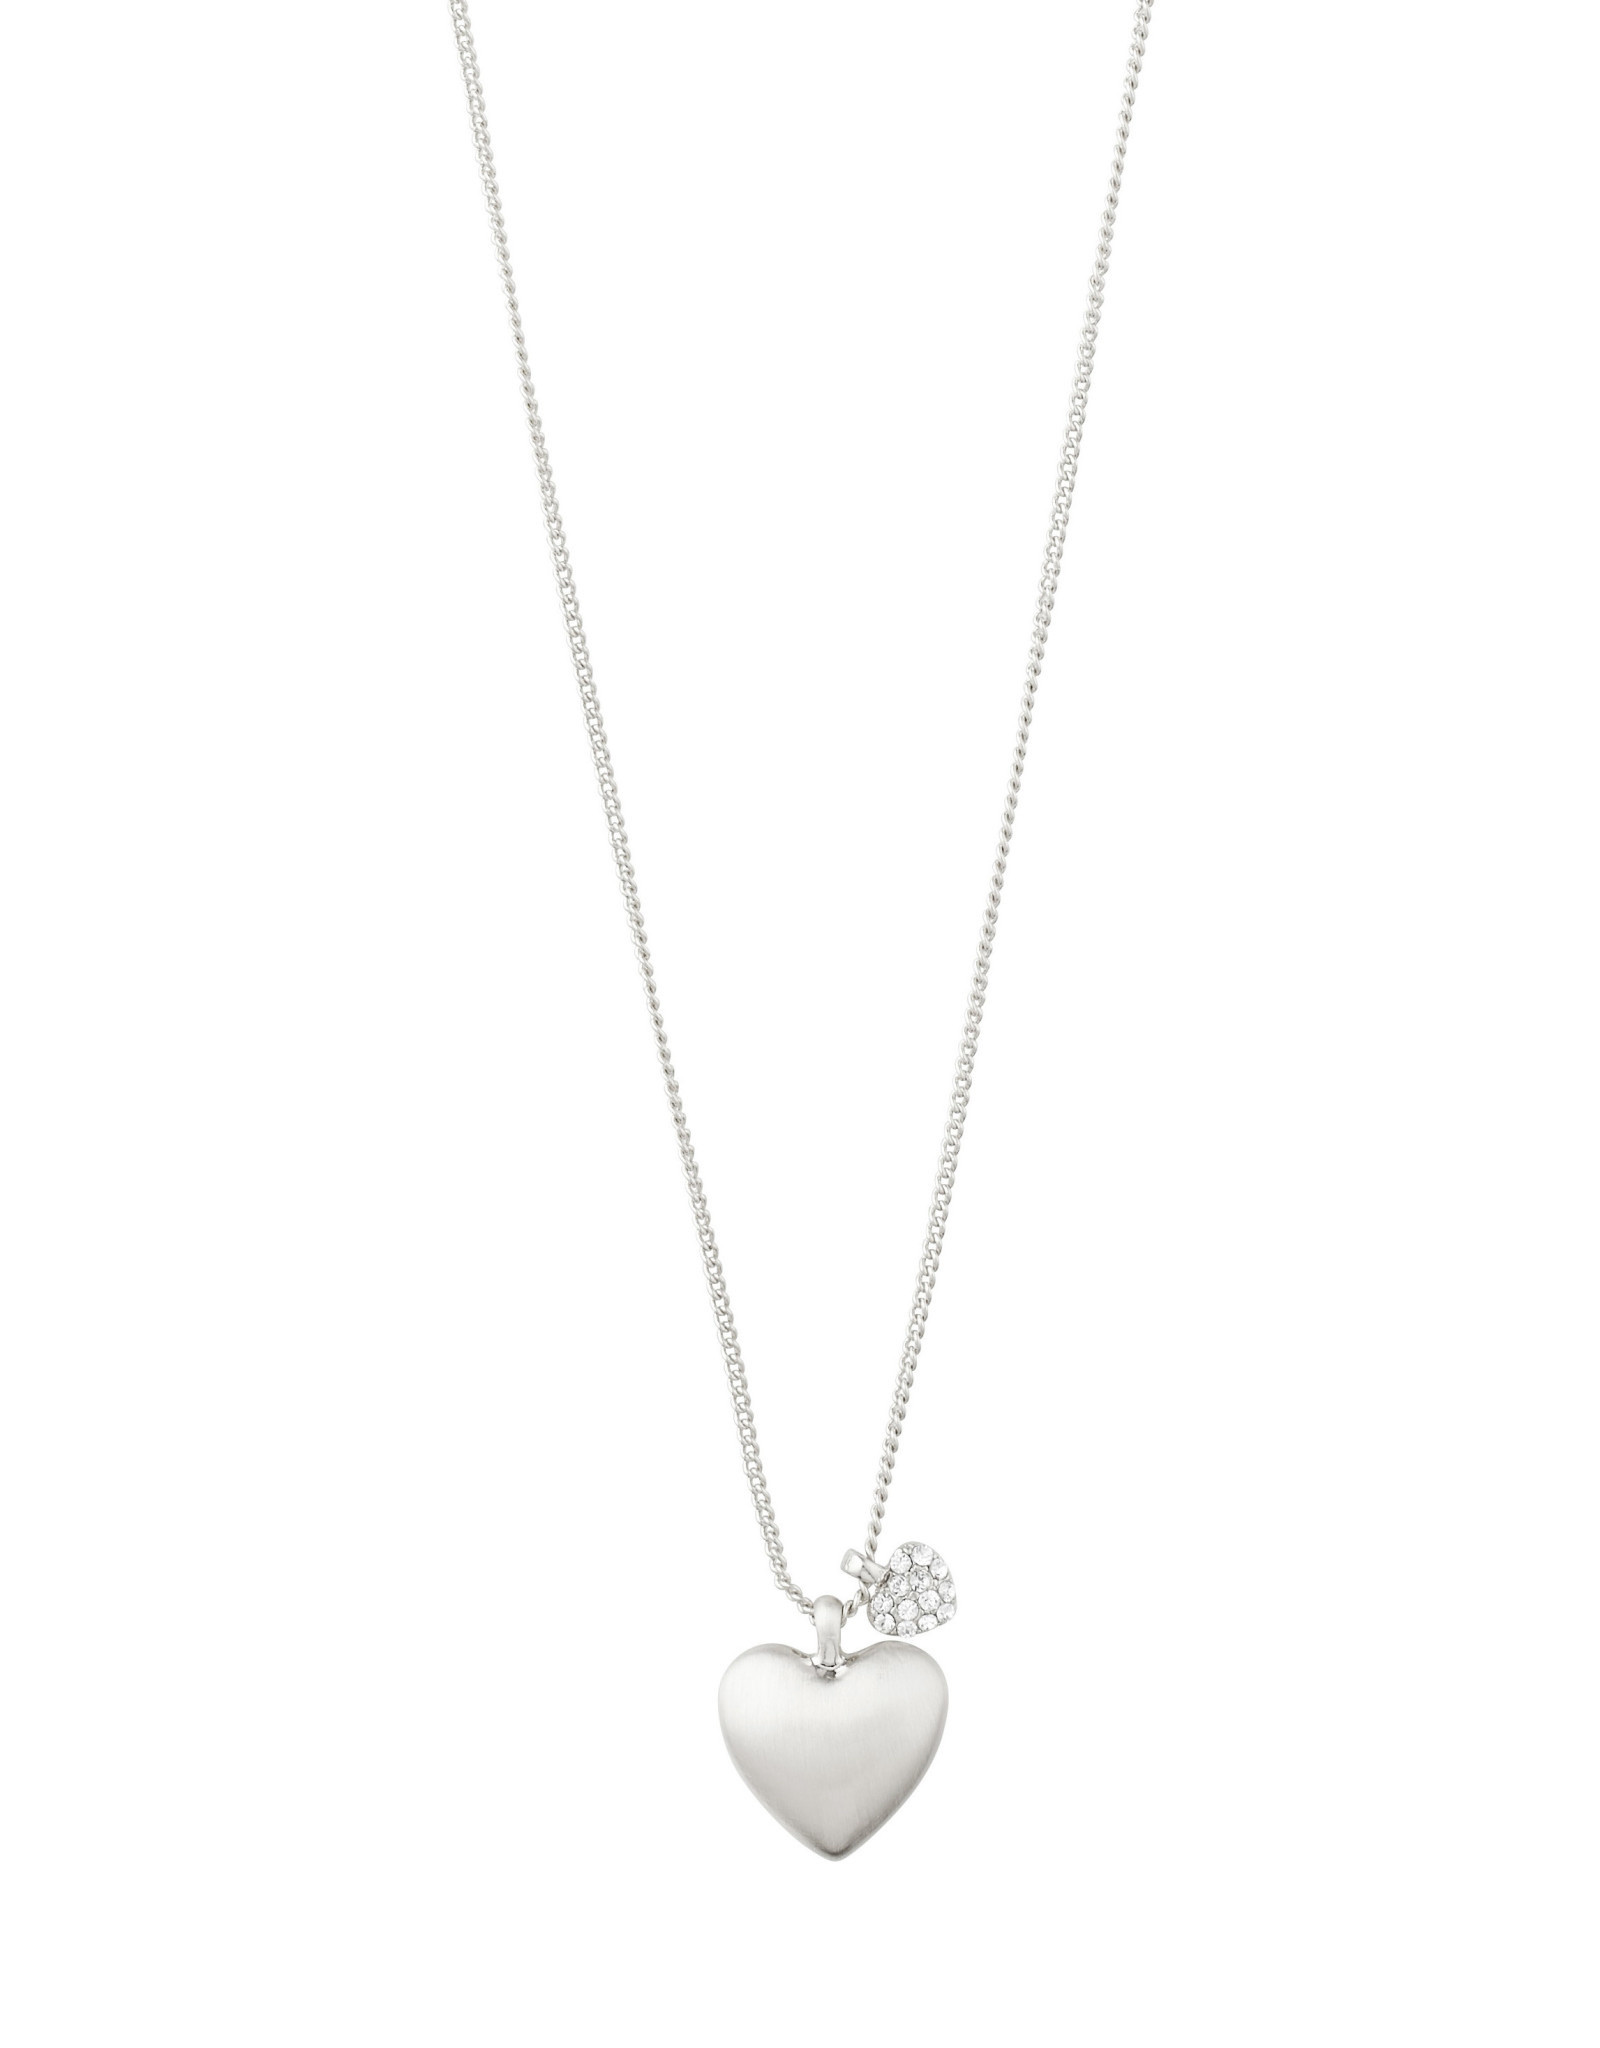 Pilgrim Pilgrim - Sophia Heart with Crystal Gem Necklace Silver